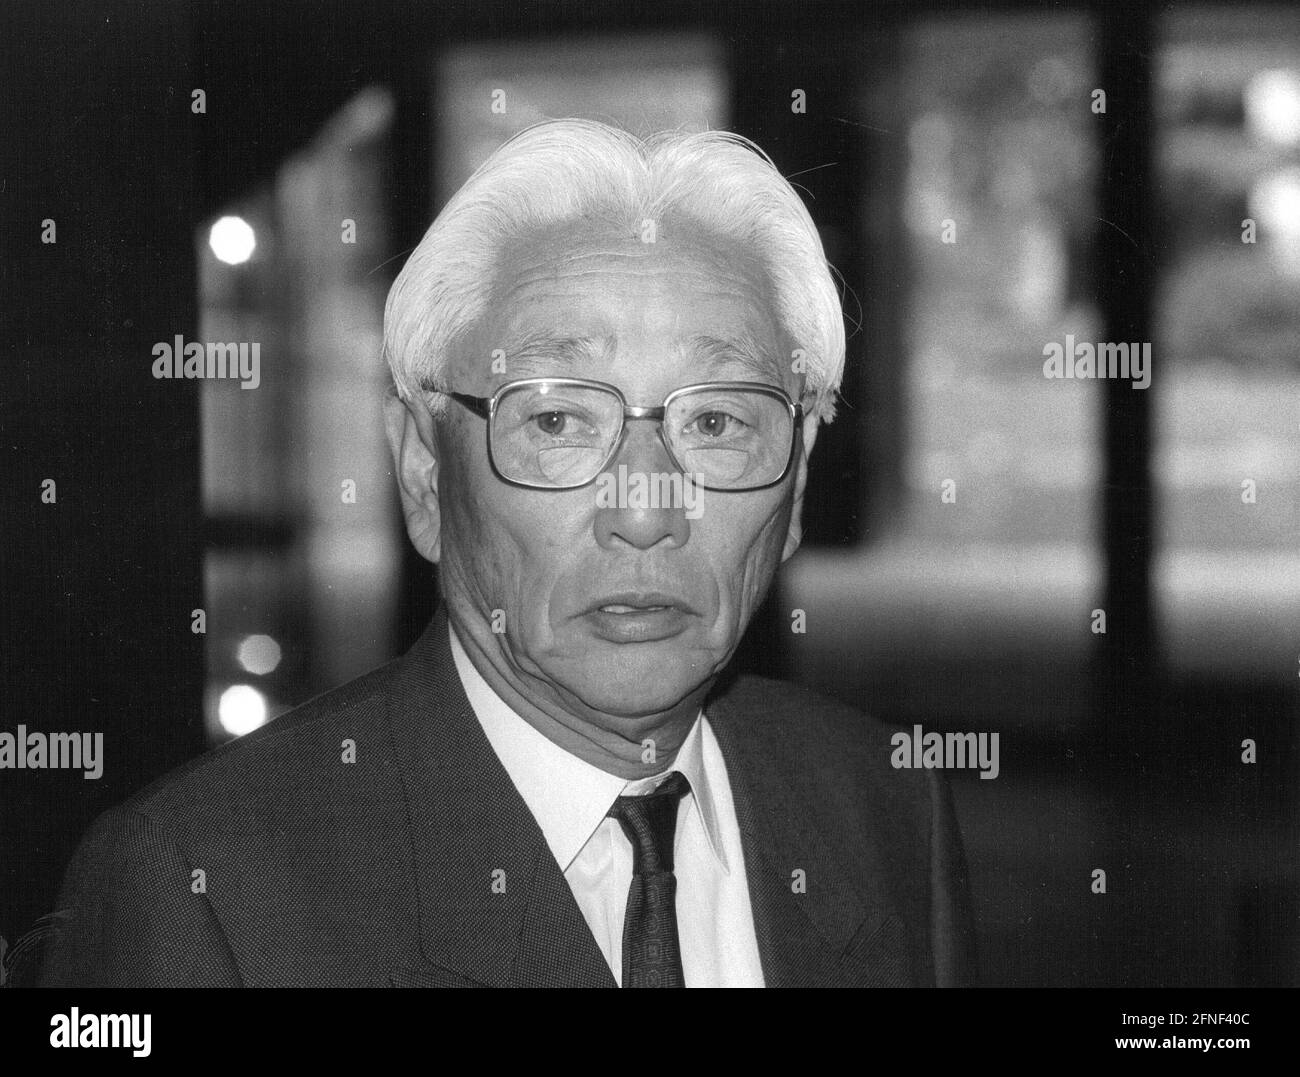 Akio morita hi-res stock photography and images - Alamy